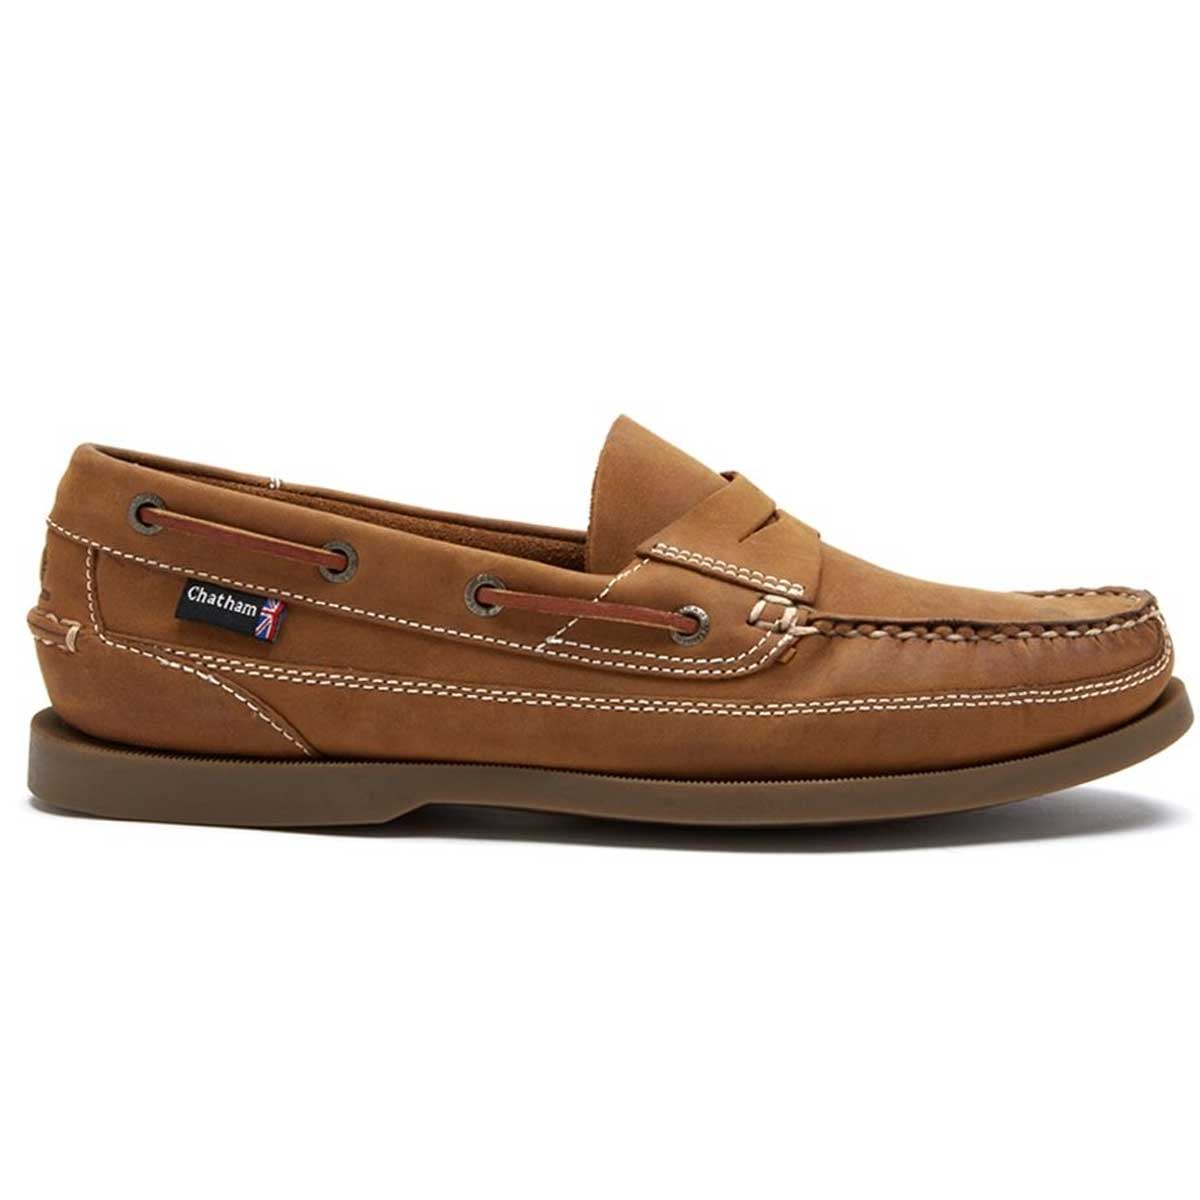 CHATHAM Gaff II G2 Slip-On Leather Deck Shoes - Mens - Walnut